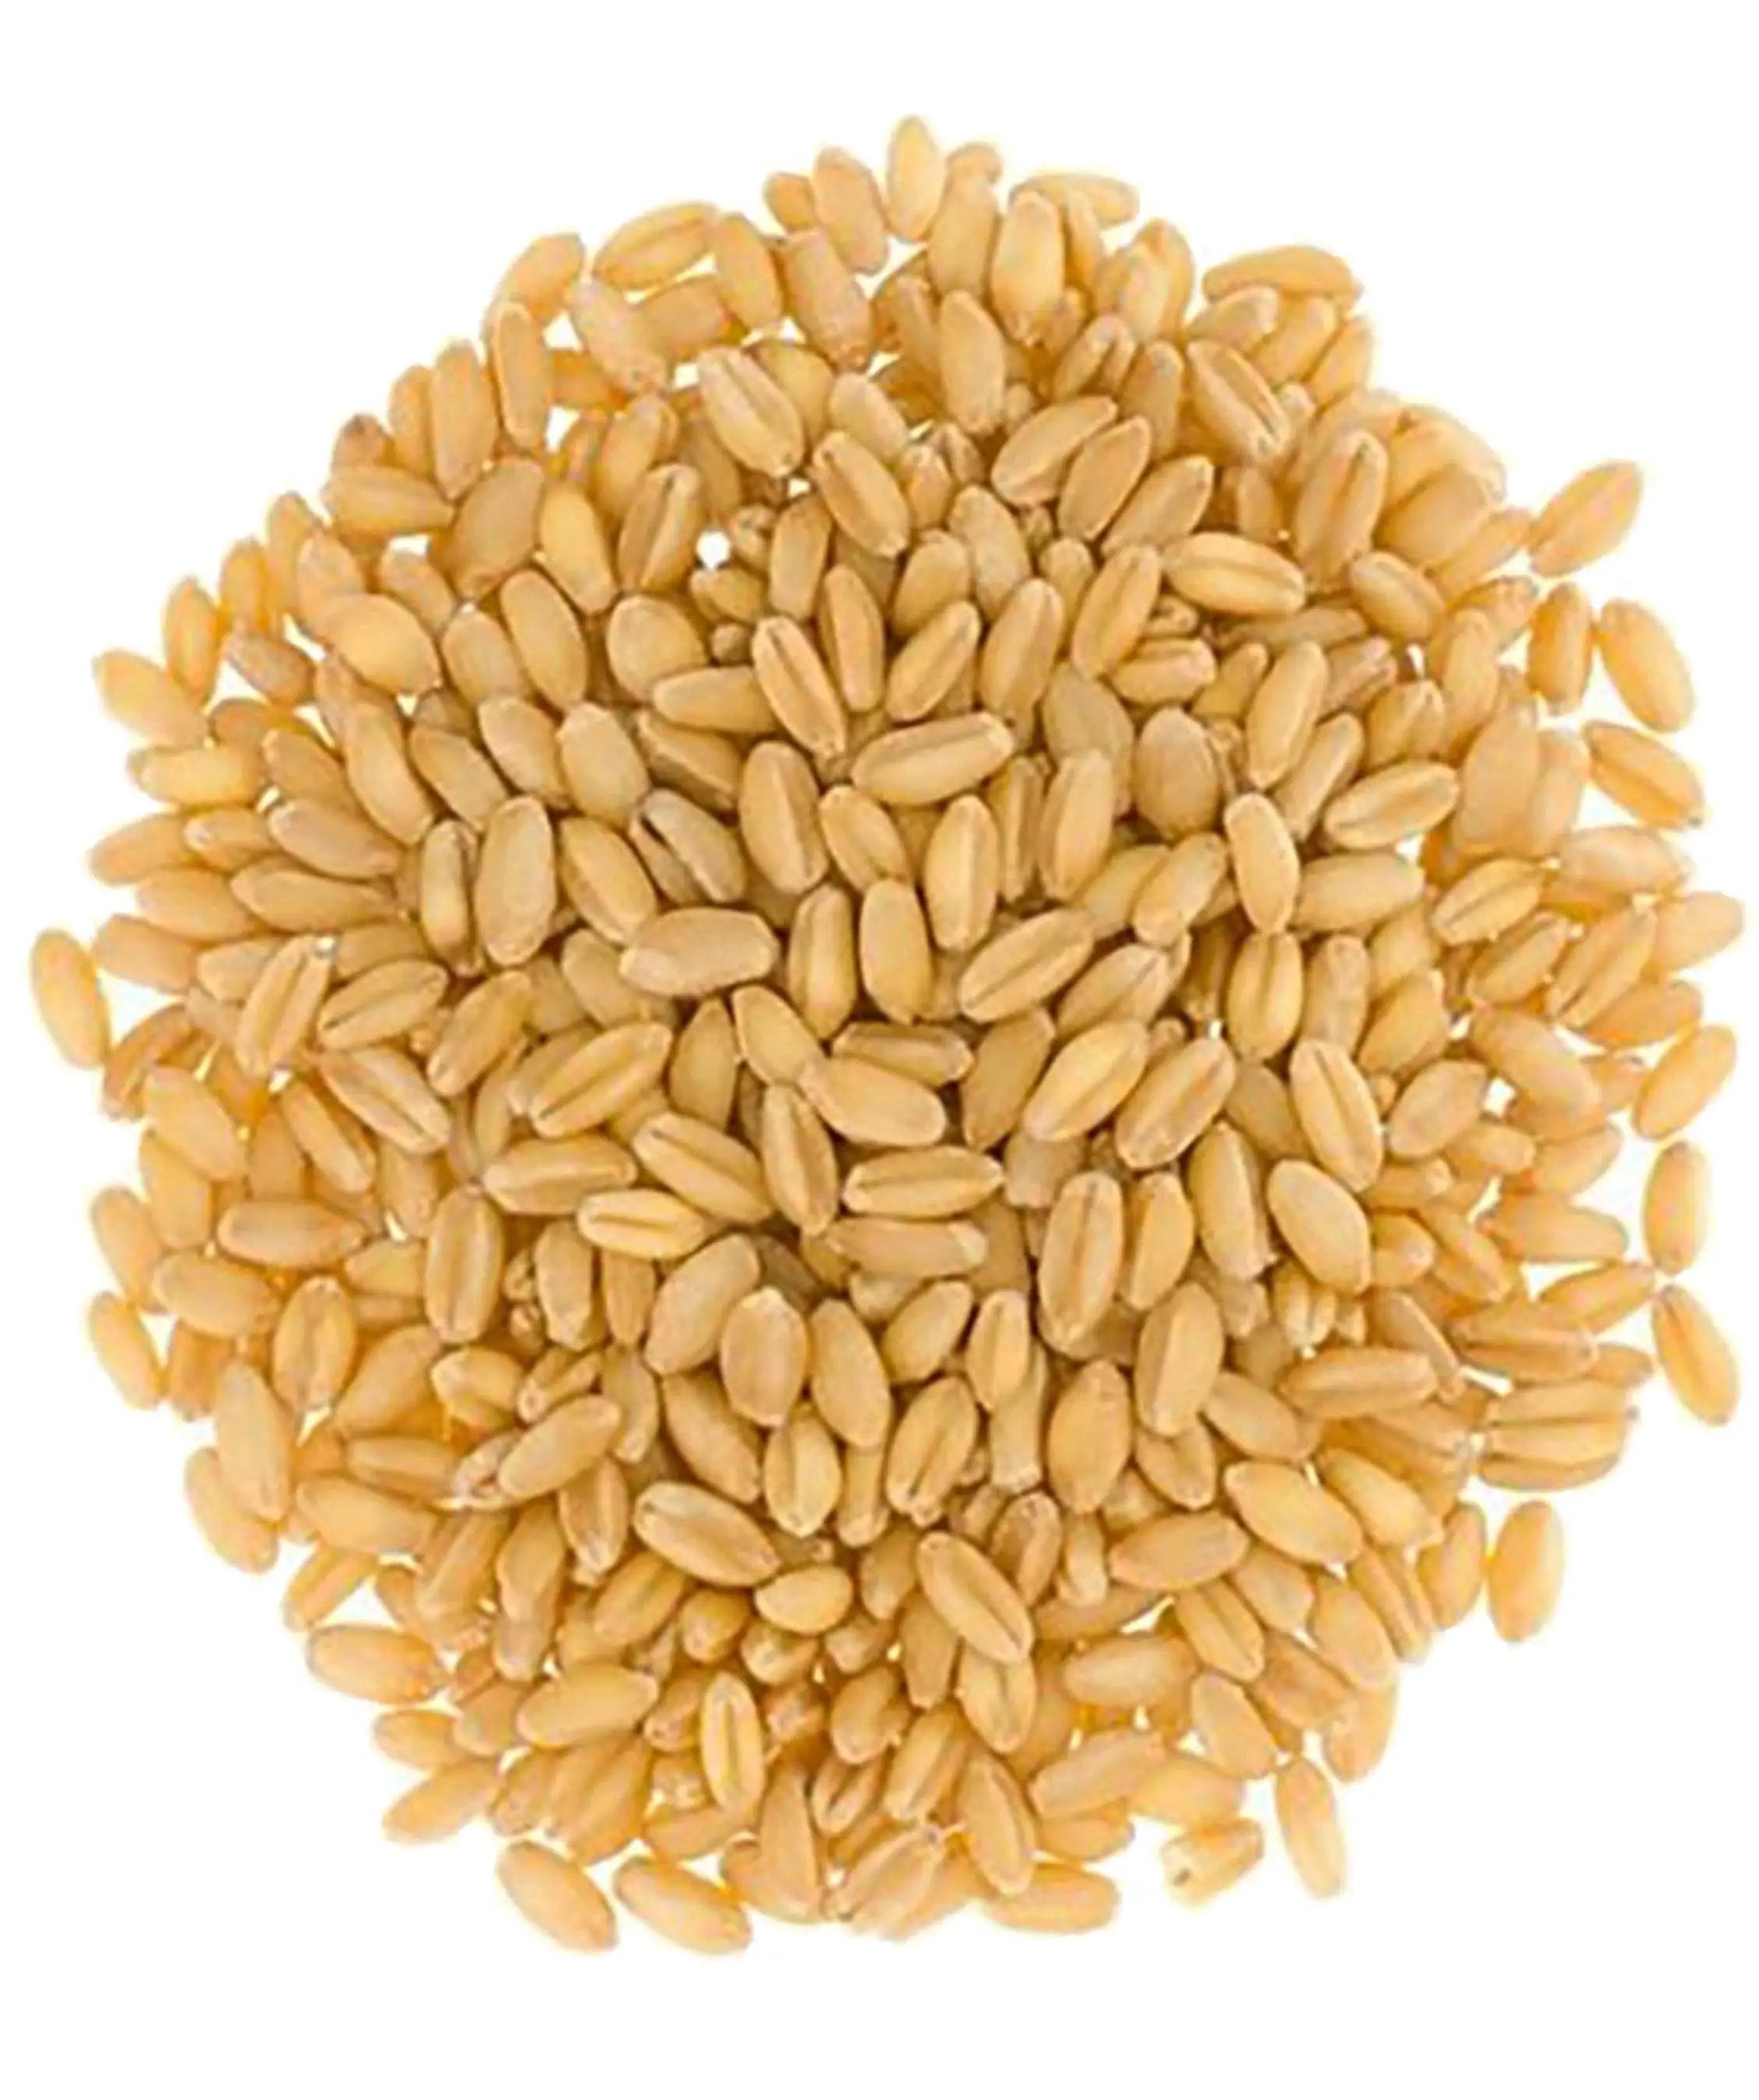 Hard White Wheat | 15 LBS